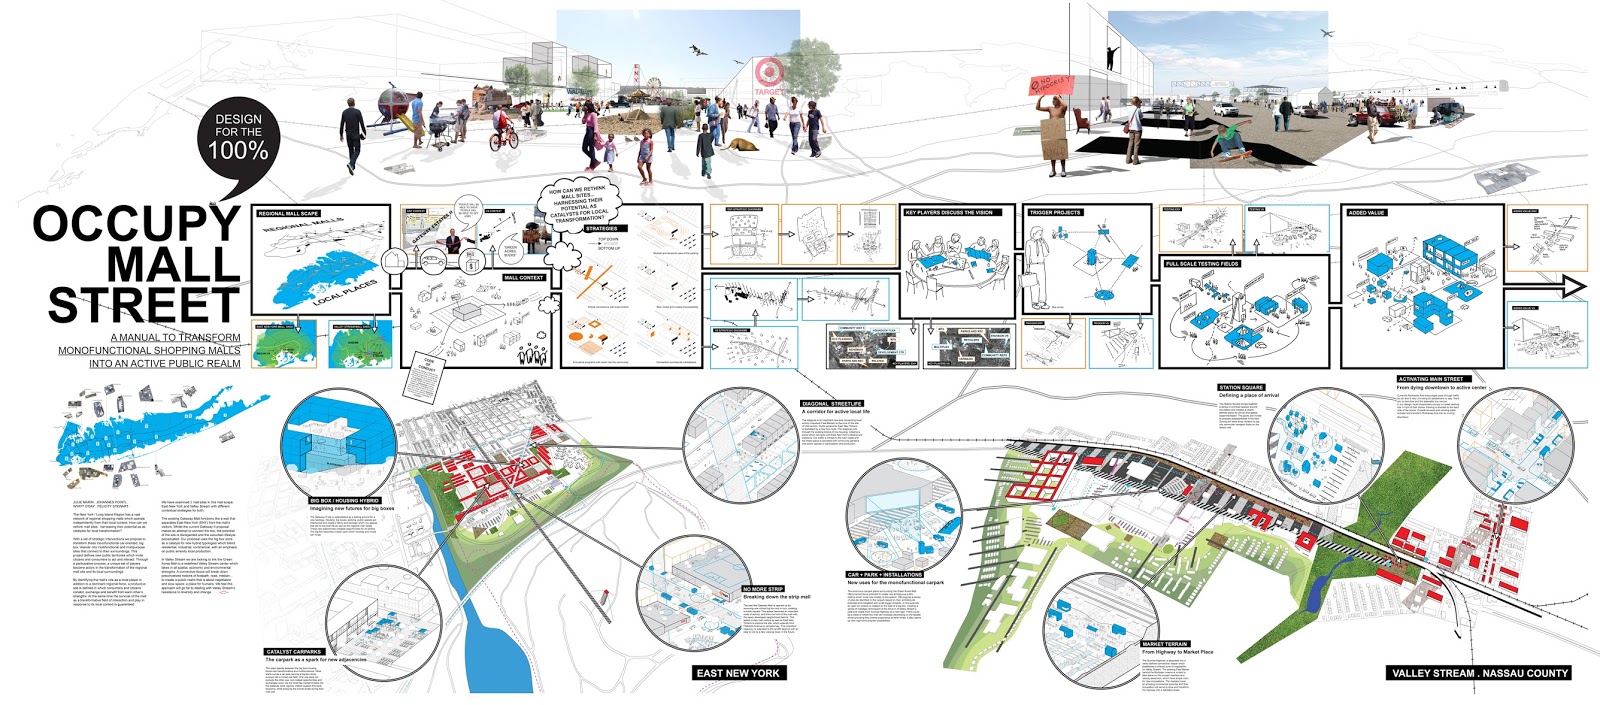 CipanTapirTenuk: Urban Design, Architecture and Planning.